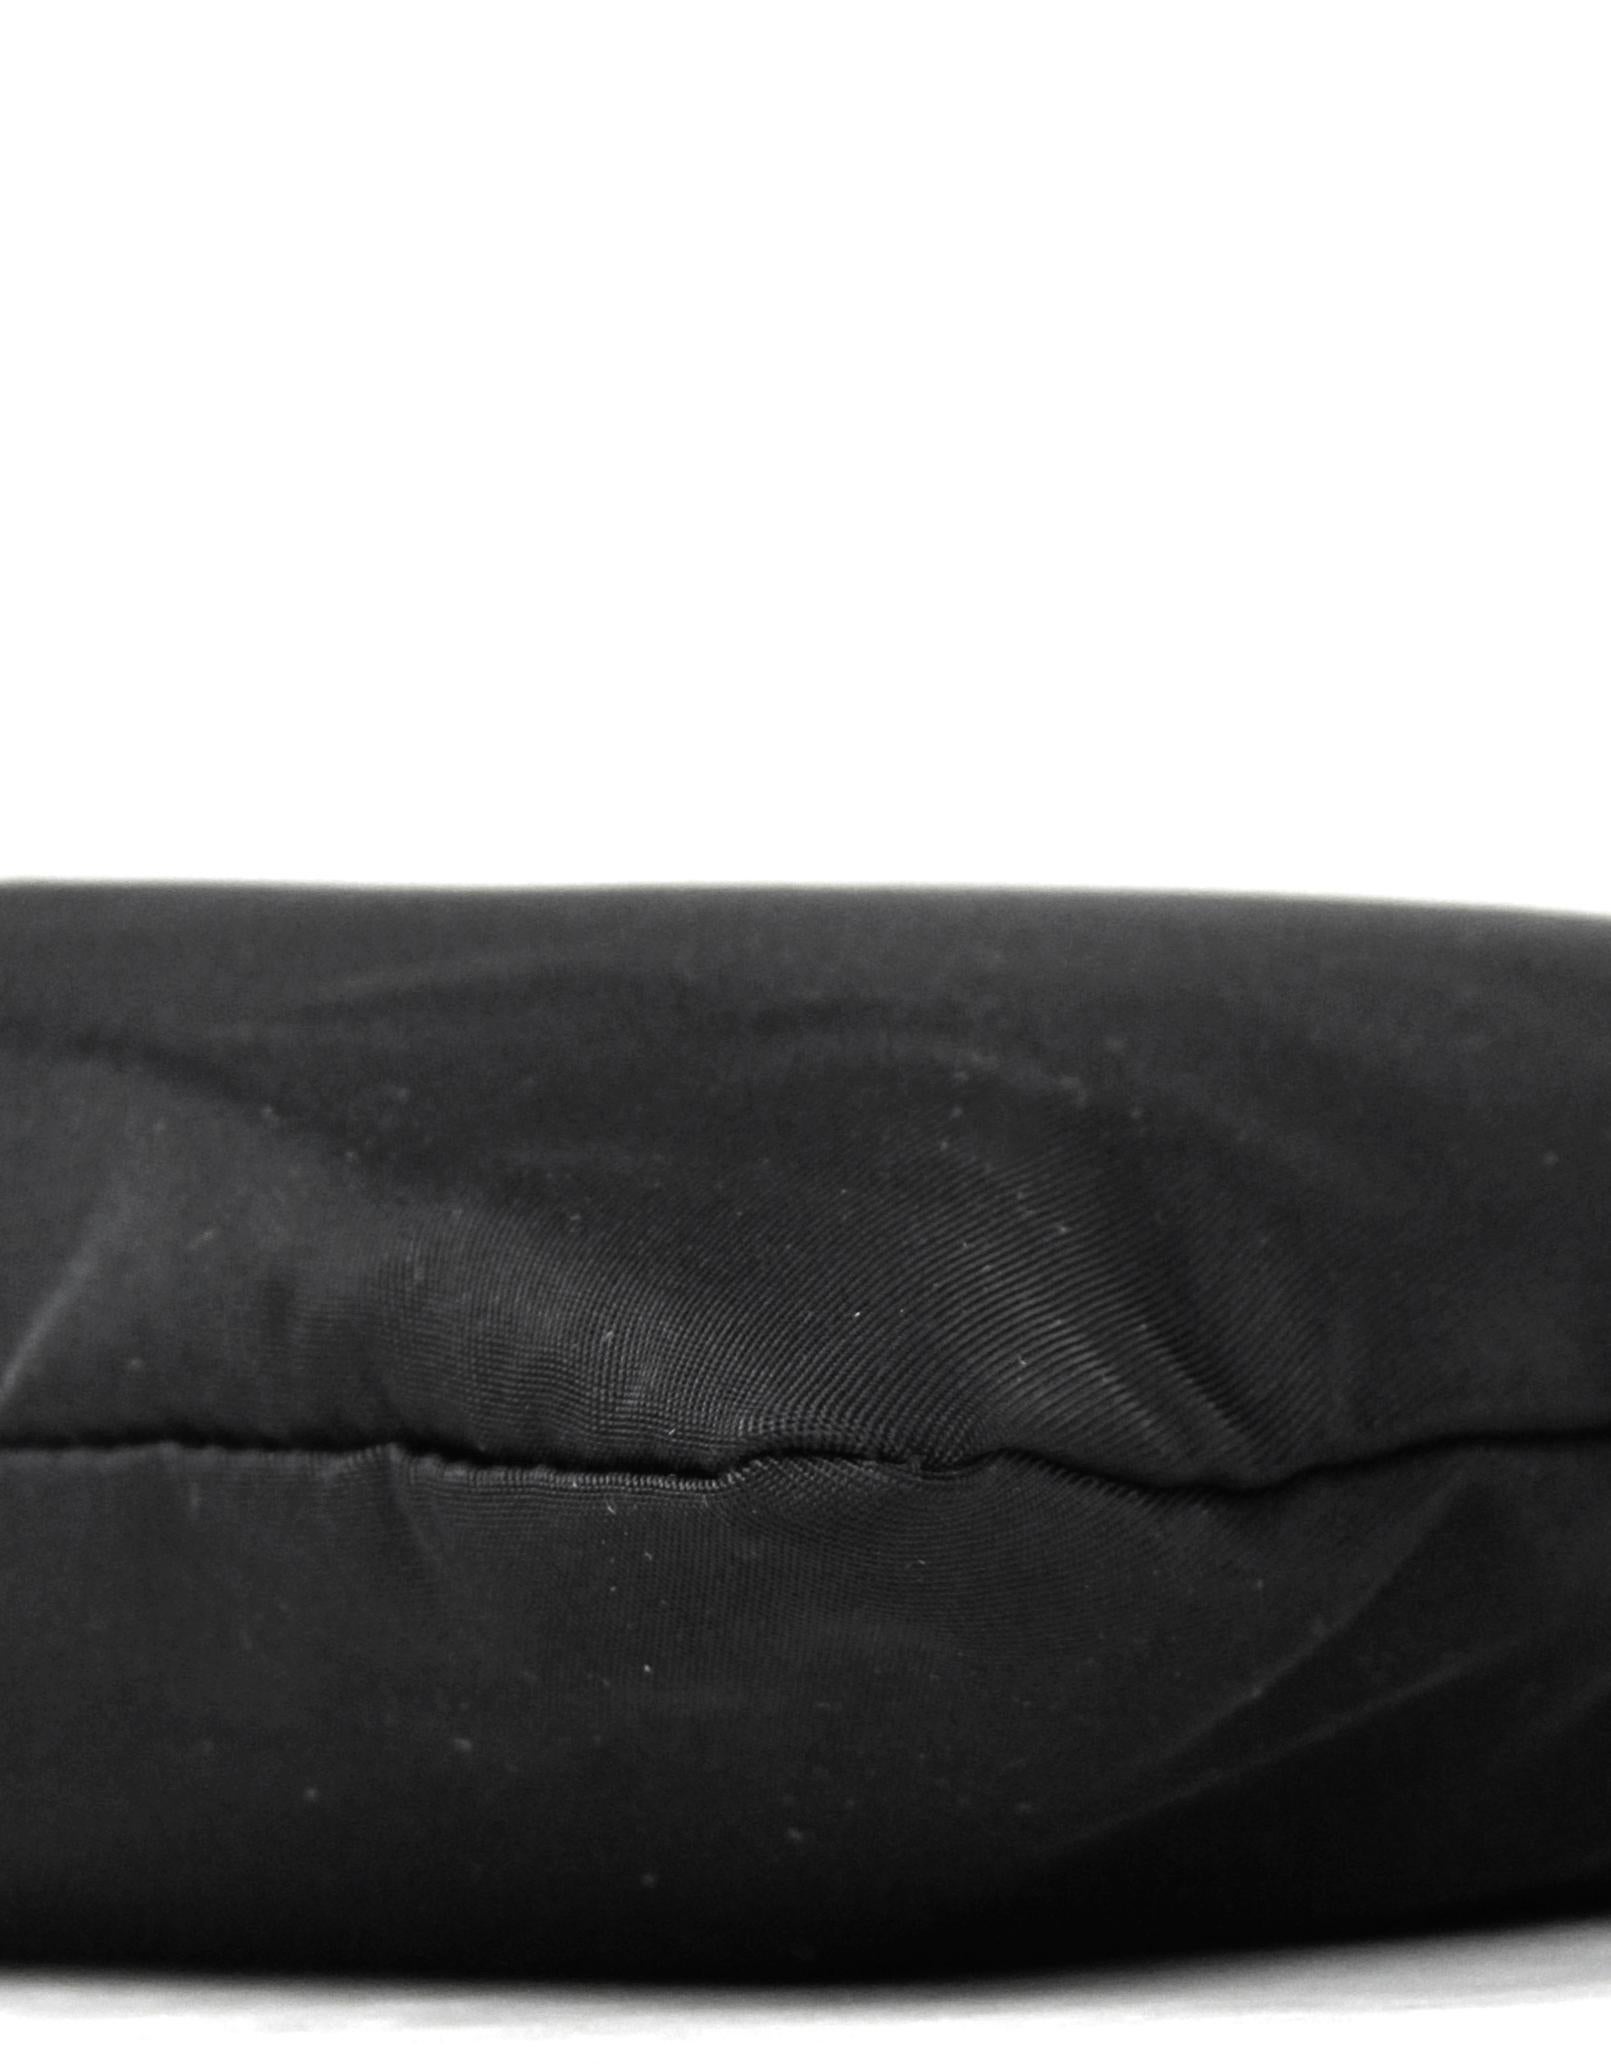 Prada - Sac à main en nylon Tessuto Saffiano noir Pour femmes en vente